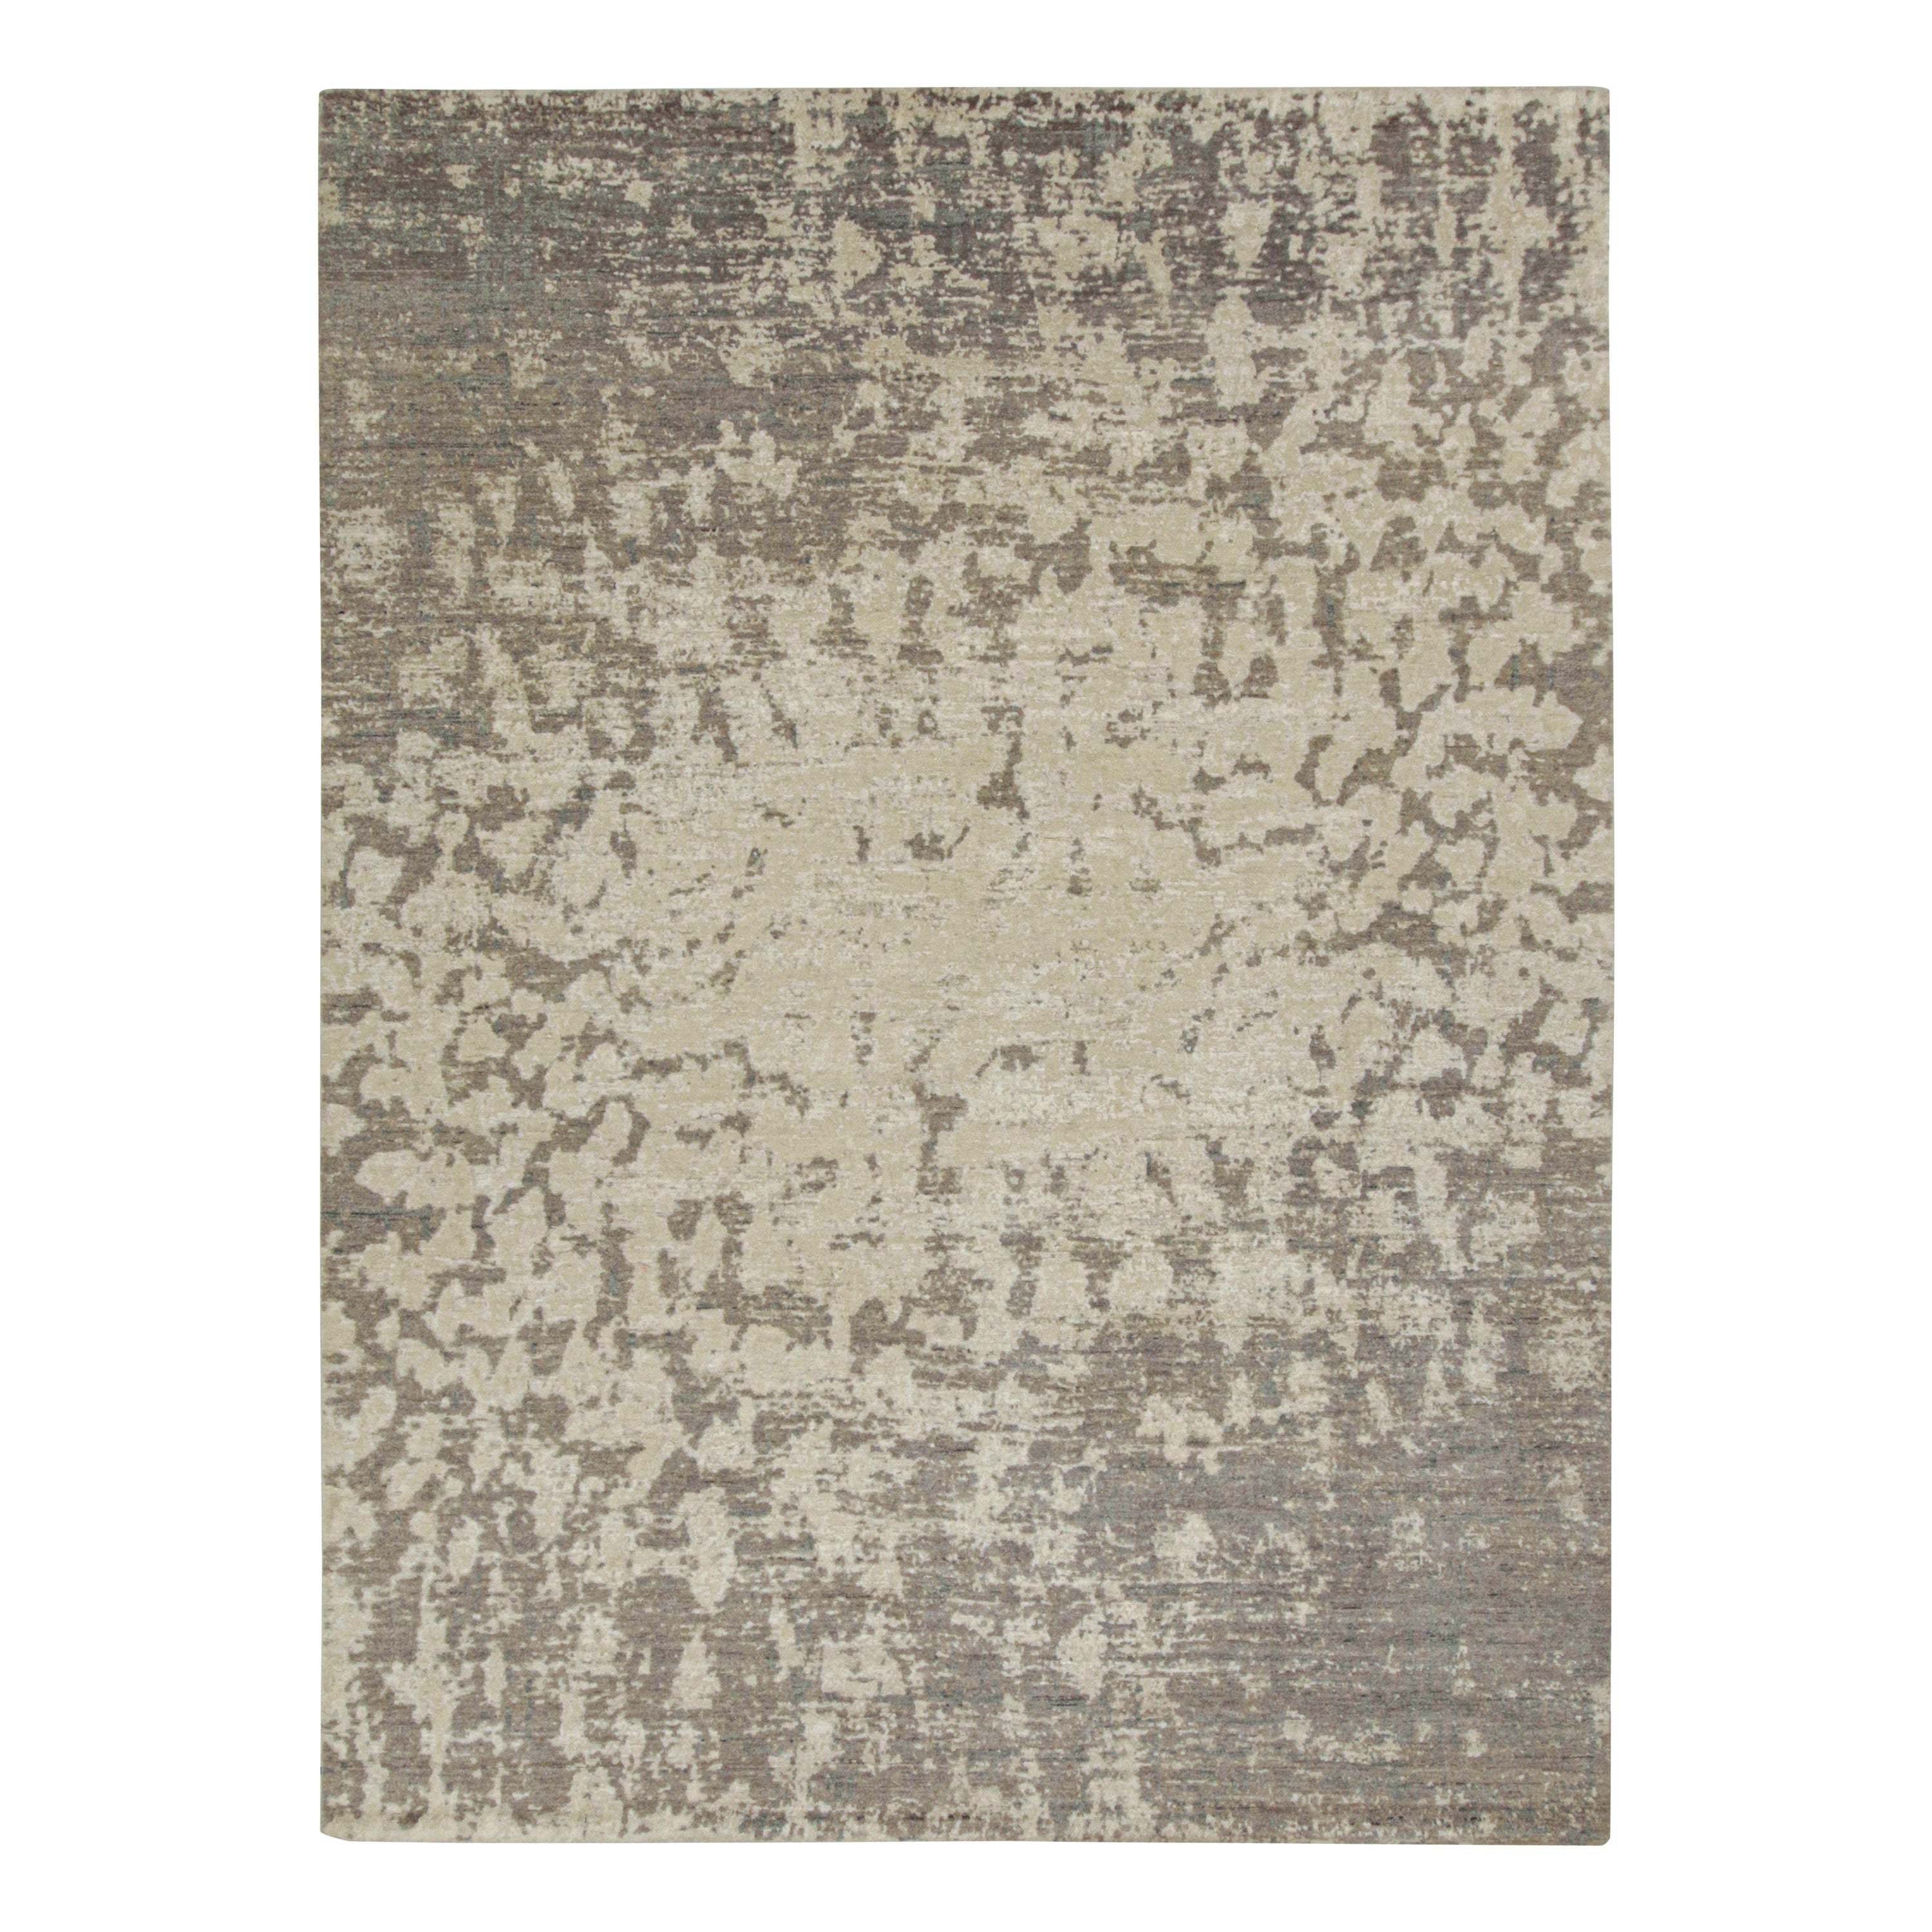 Rug & Kilim's Modern Abstract Rug in Beige-Brown and Gray Patterns (Tapis abstrait moderne à motifs beige, marron et gris)